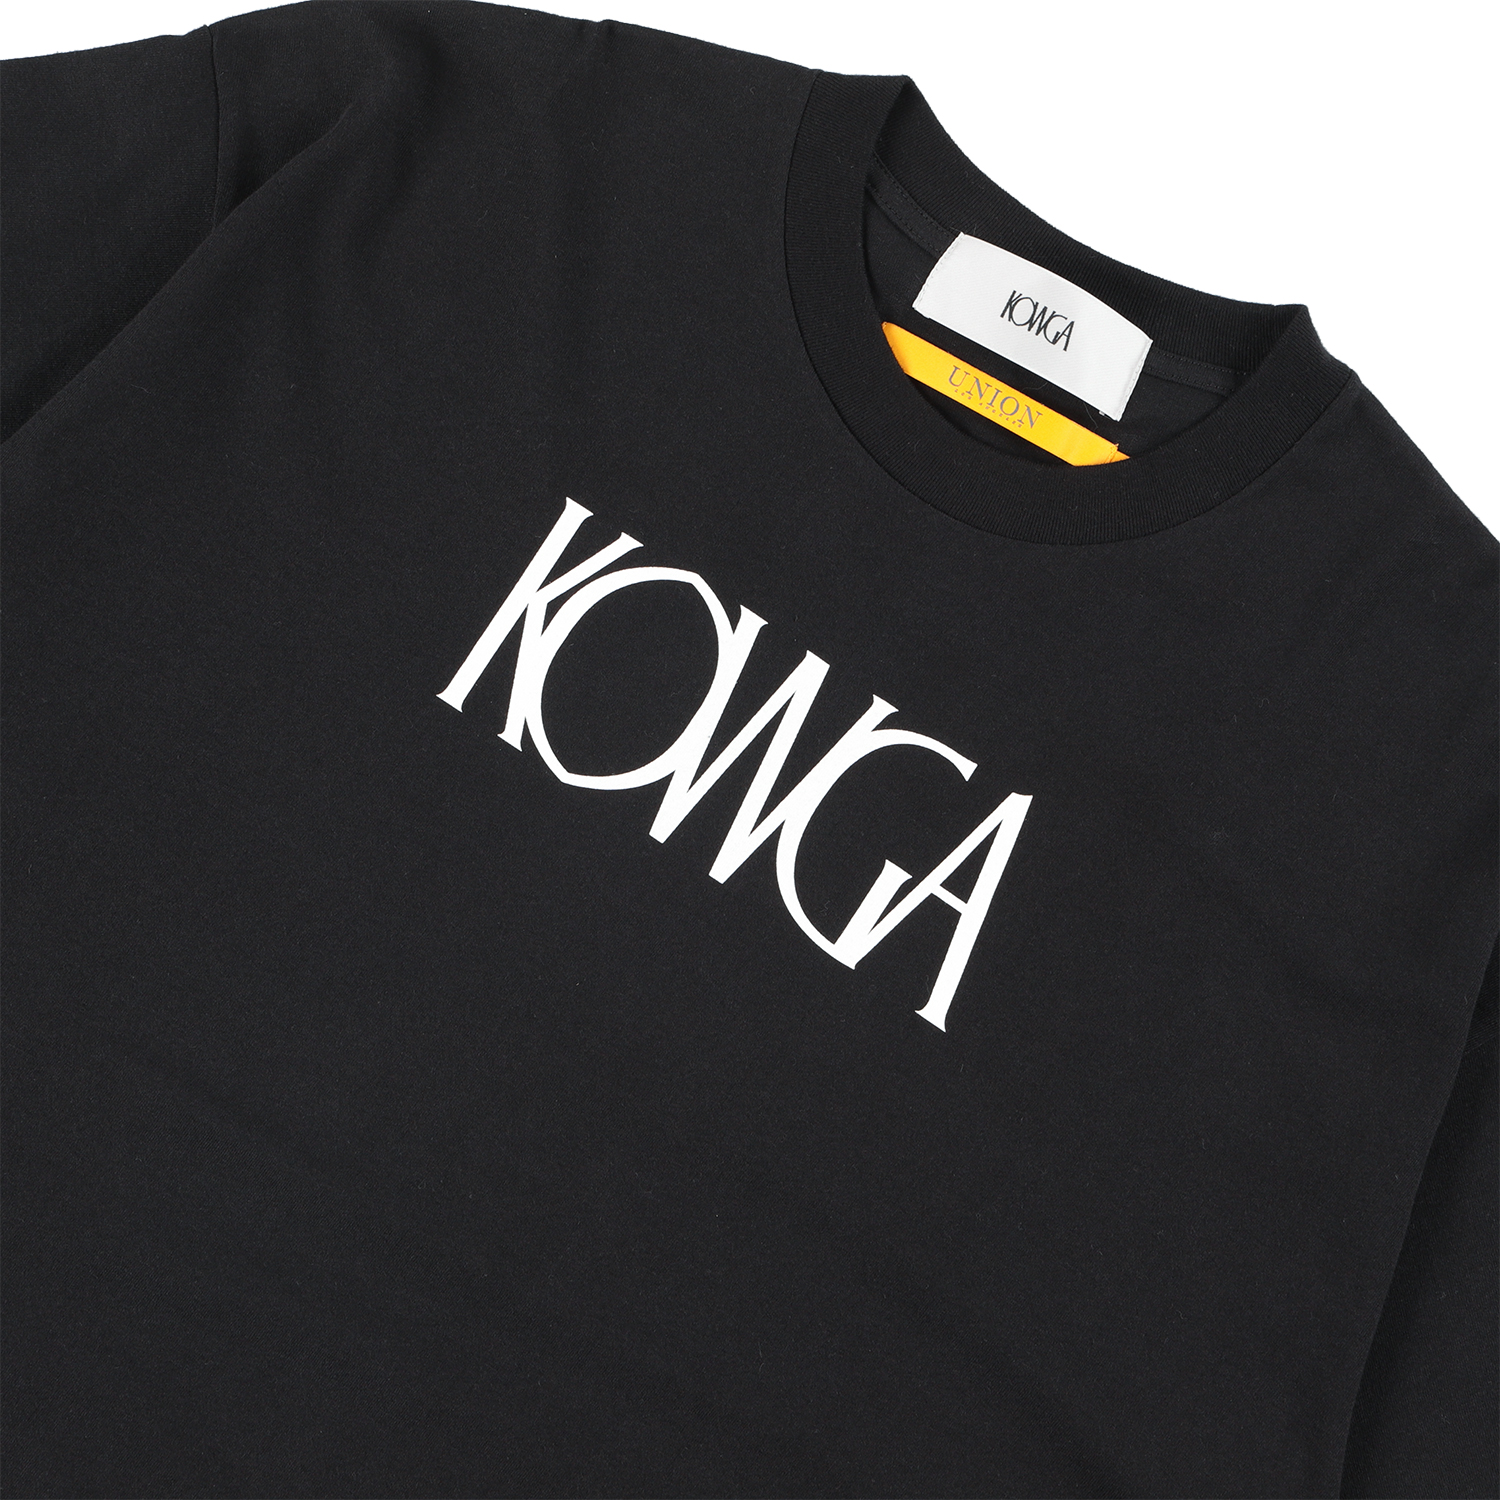 KOWGA × UNION Limited Logo Tee 黒 M 店舗限定-